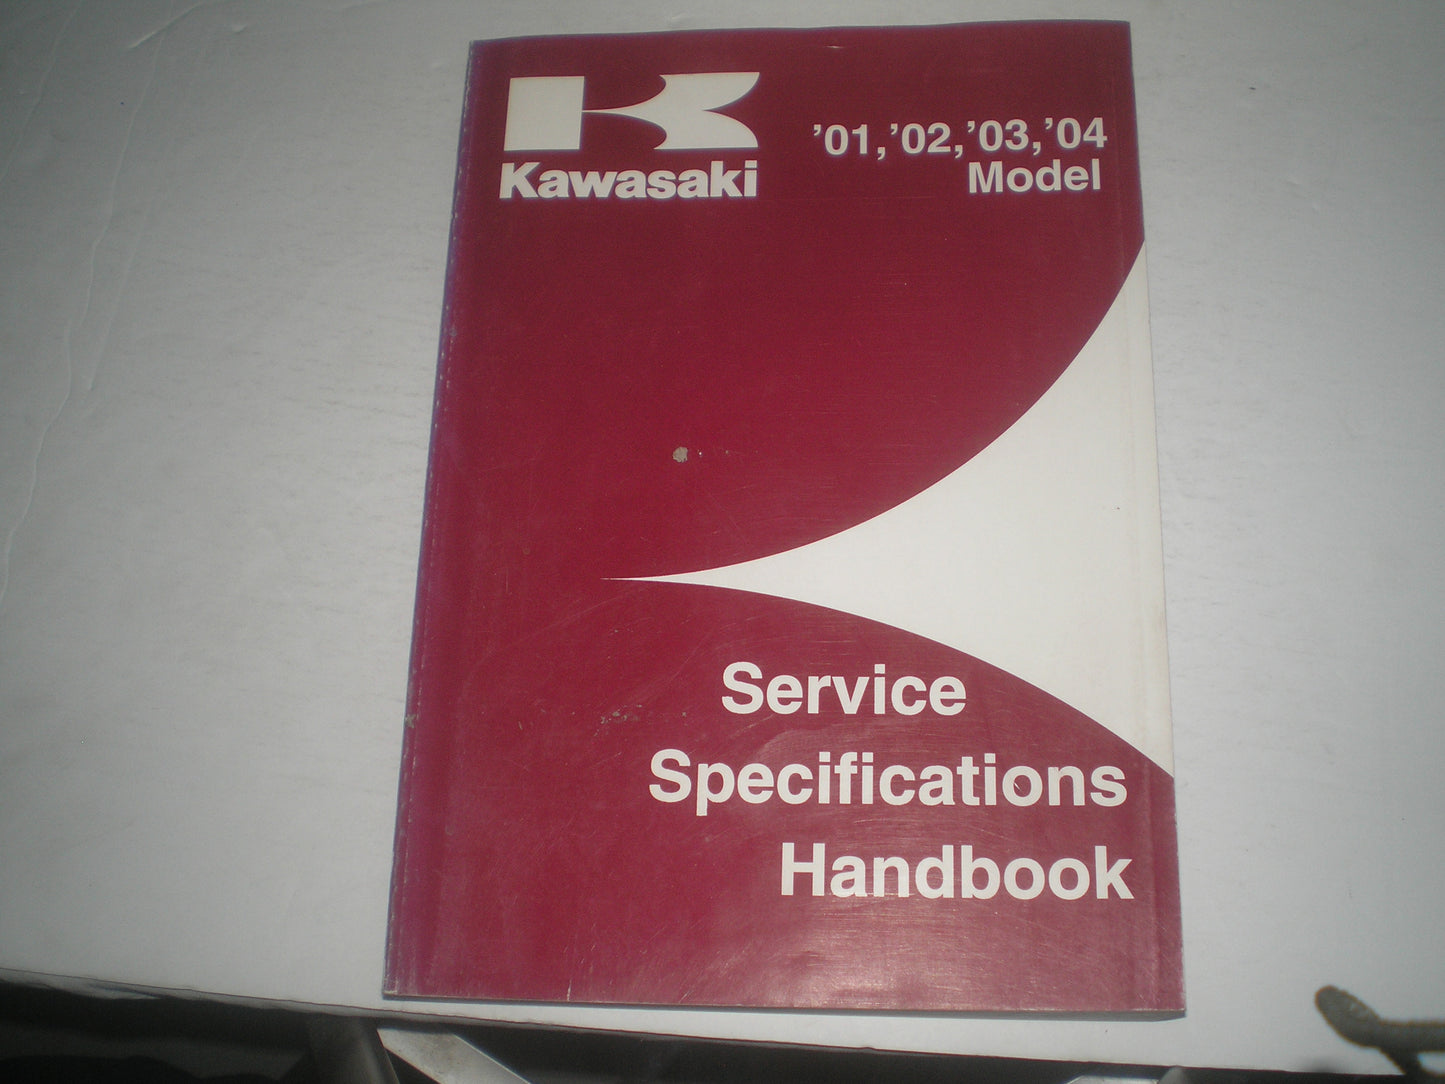 KAWASAKI 2001-2004 Models  Service Specifications Handbook  99926-1036-01  #1292